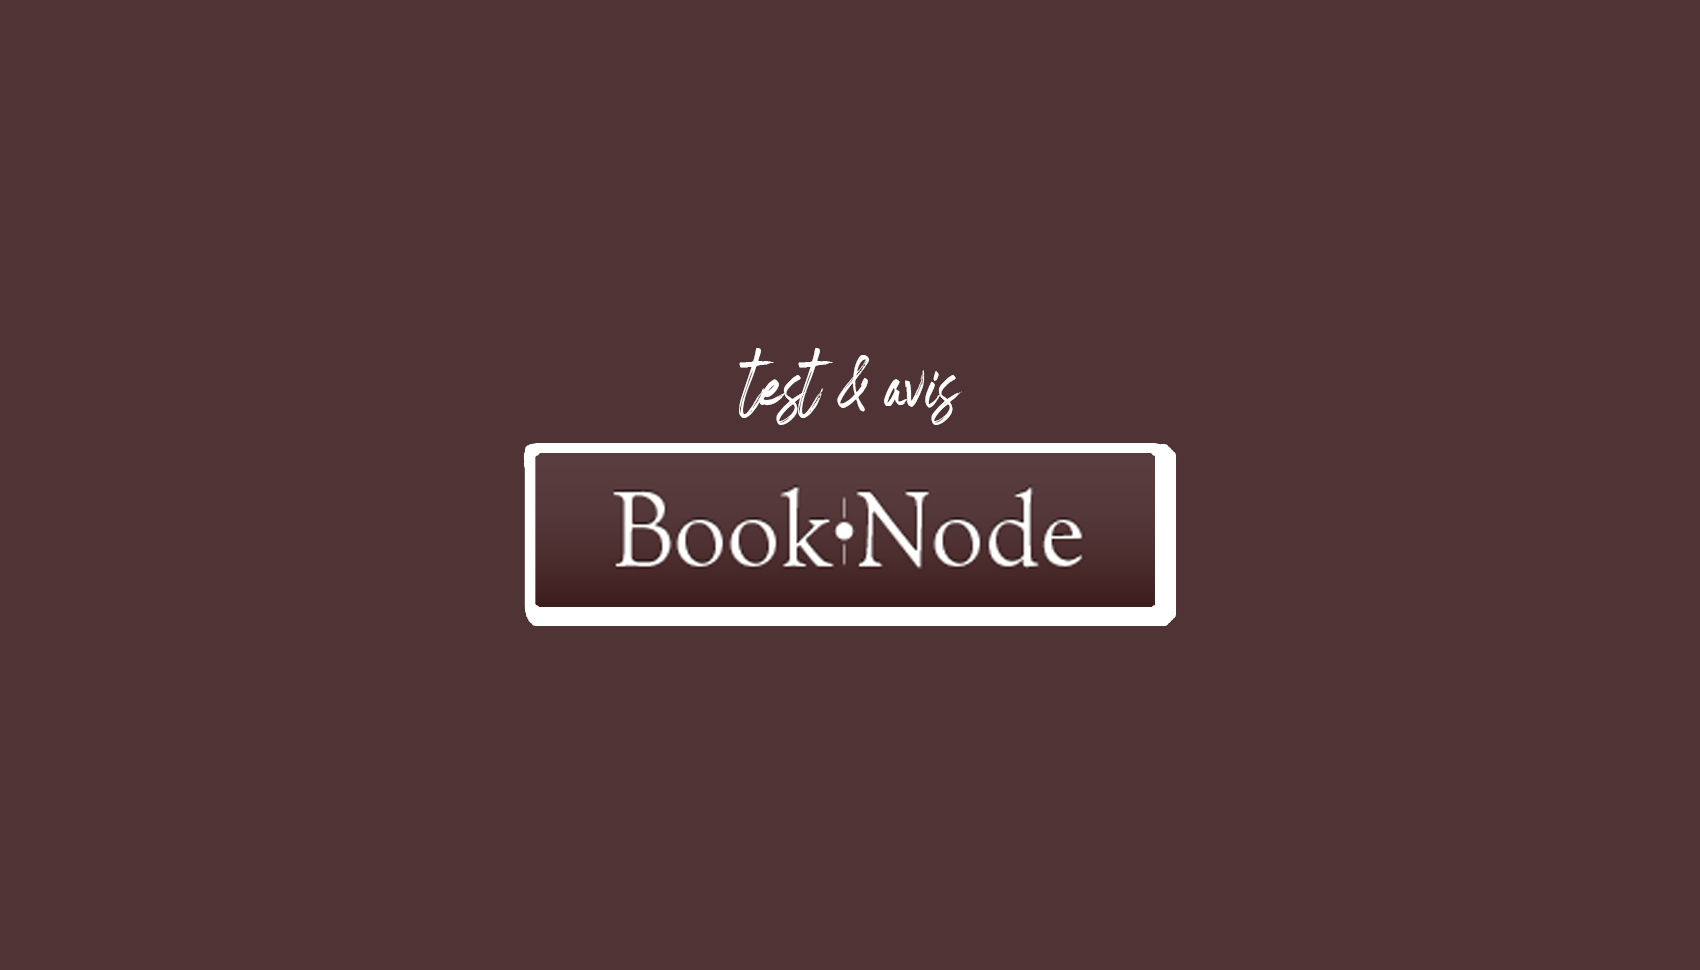 Booknode: Η δωρεάν εικονική βιβλιοθήκη για τους λάτρεις της ανάγνωσης (Επισκόπηση και δοκιμή)